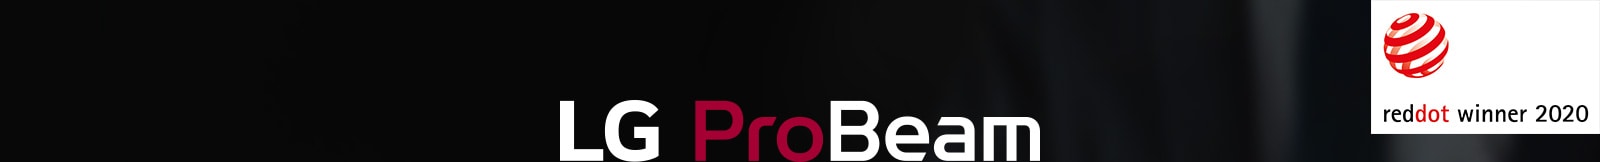 LG ProBeam / reddot winner 2020